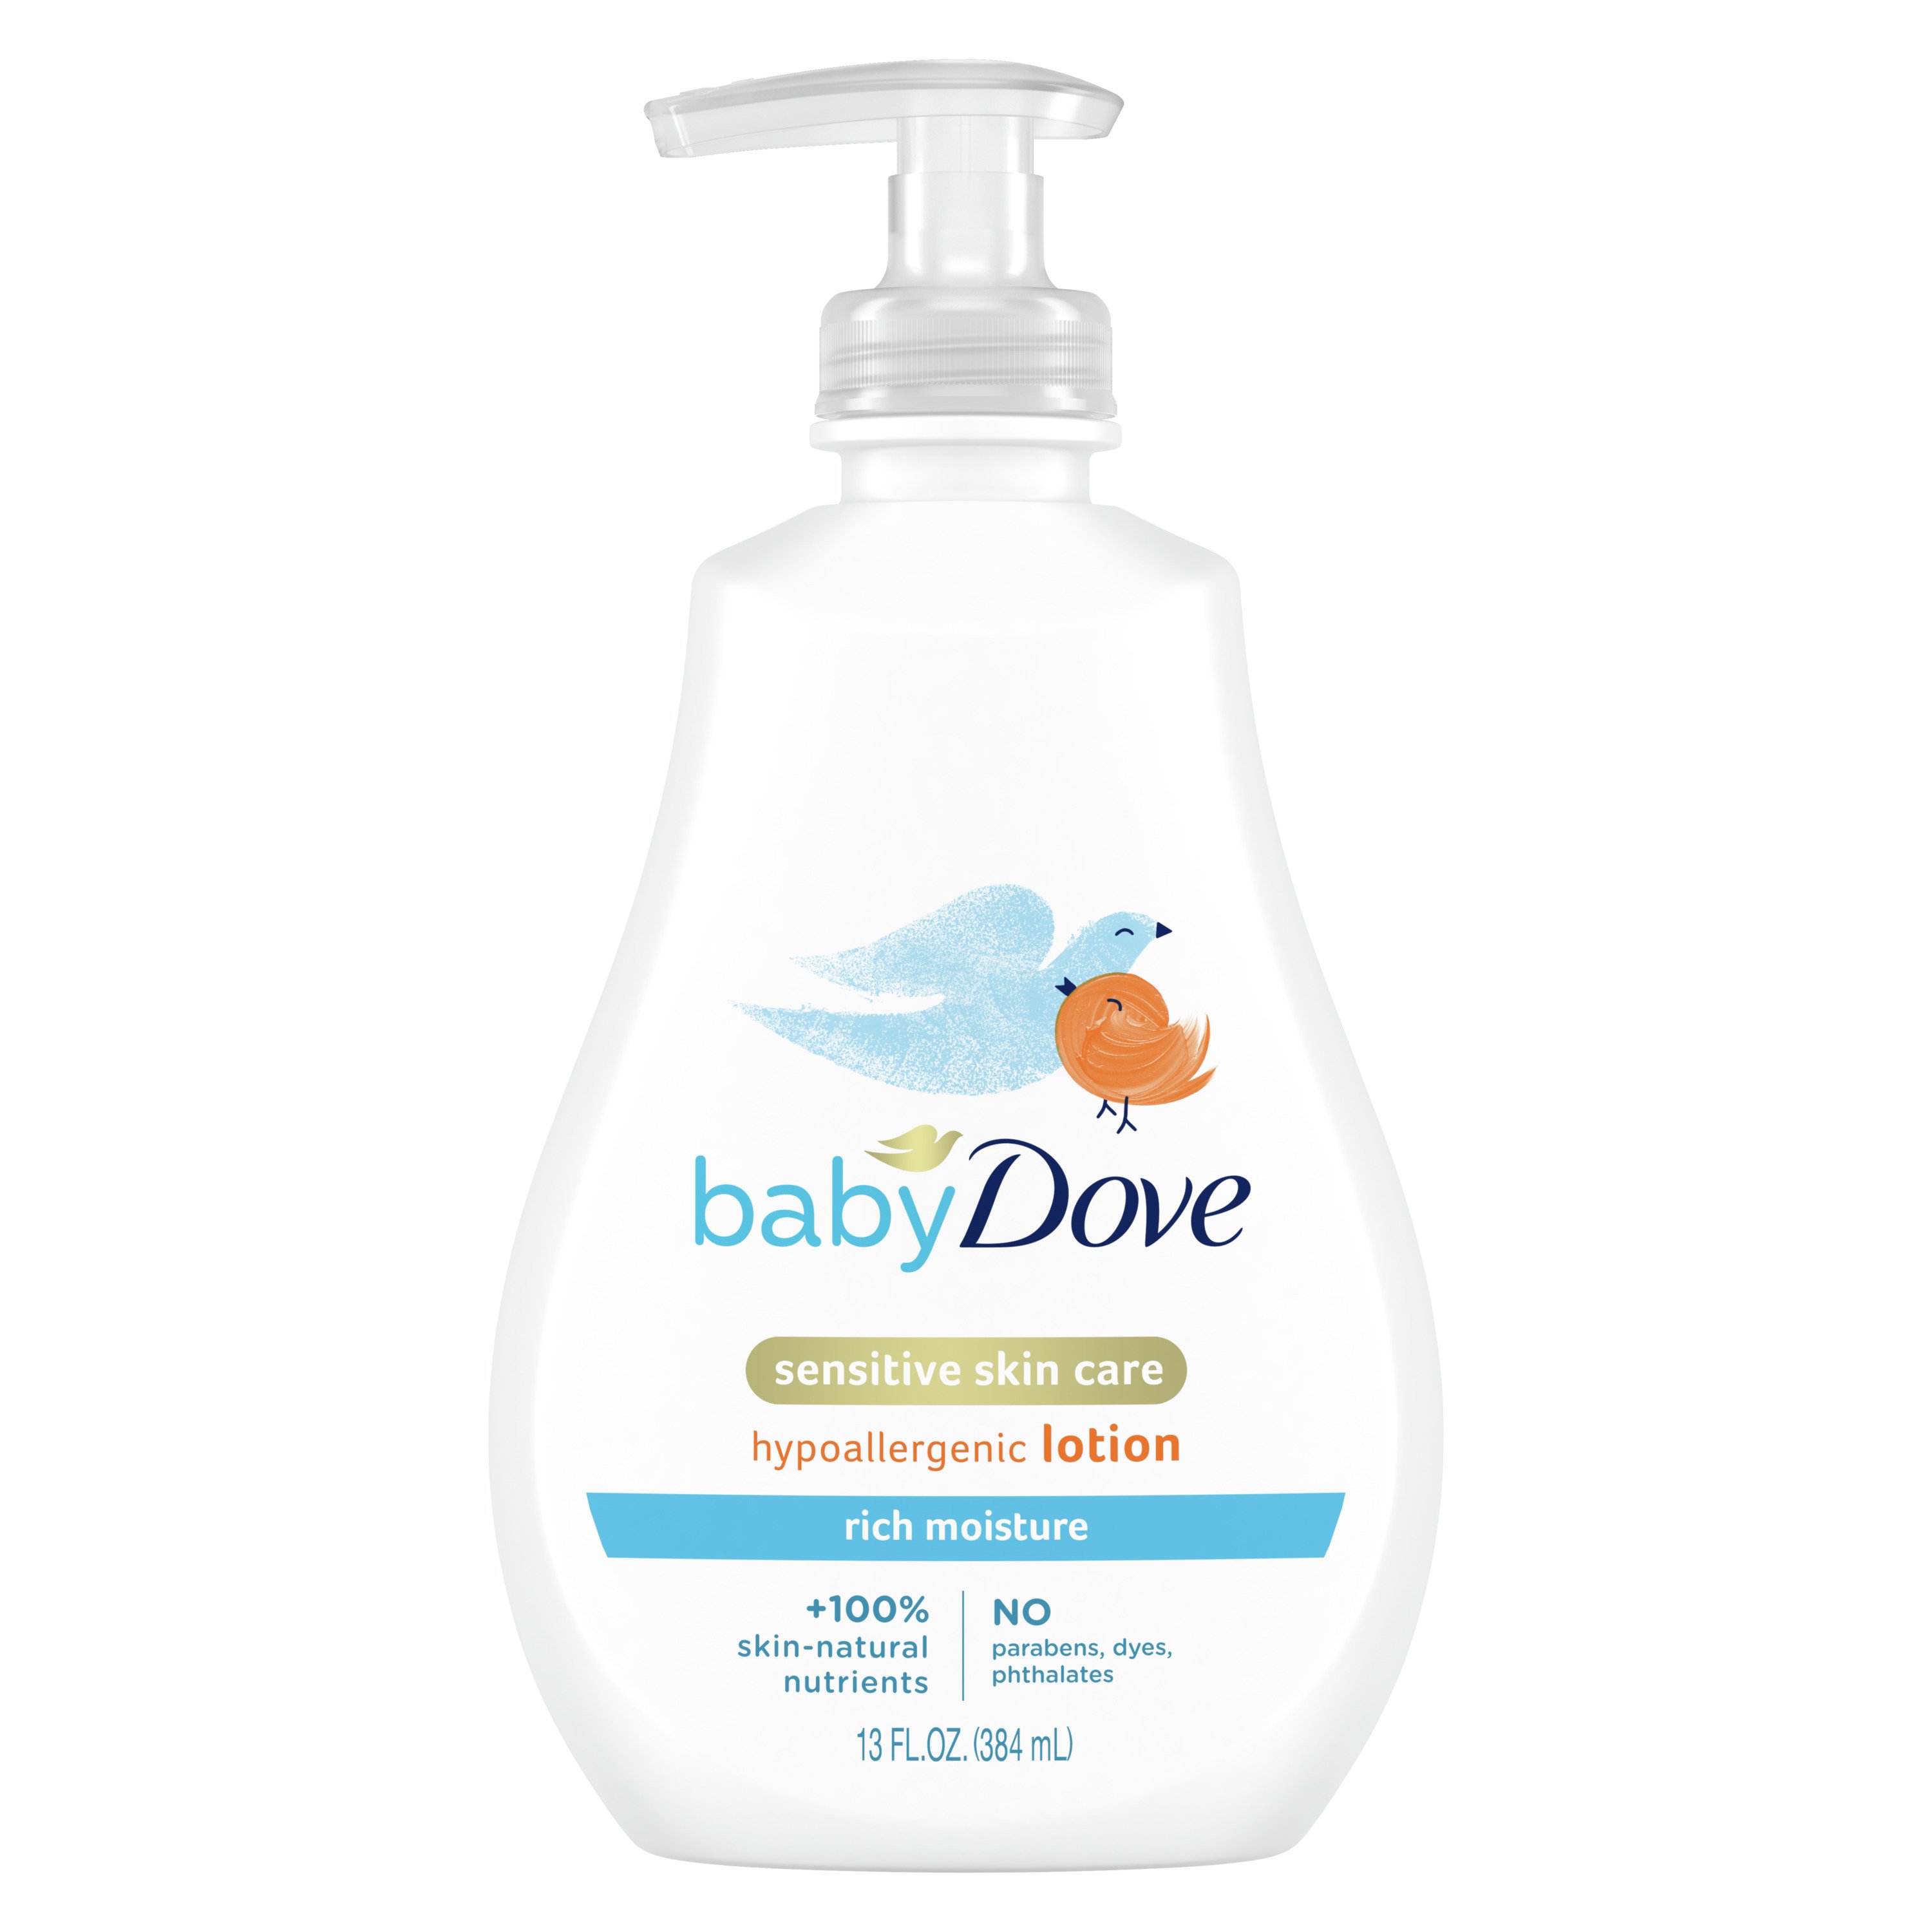 baby dove rich moisture lotion